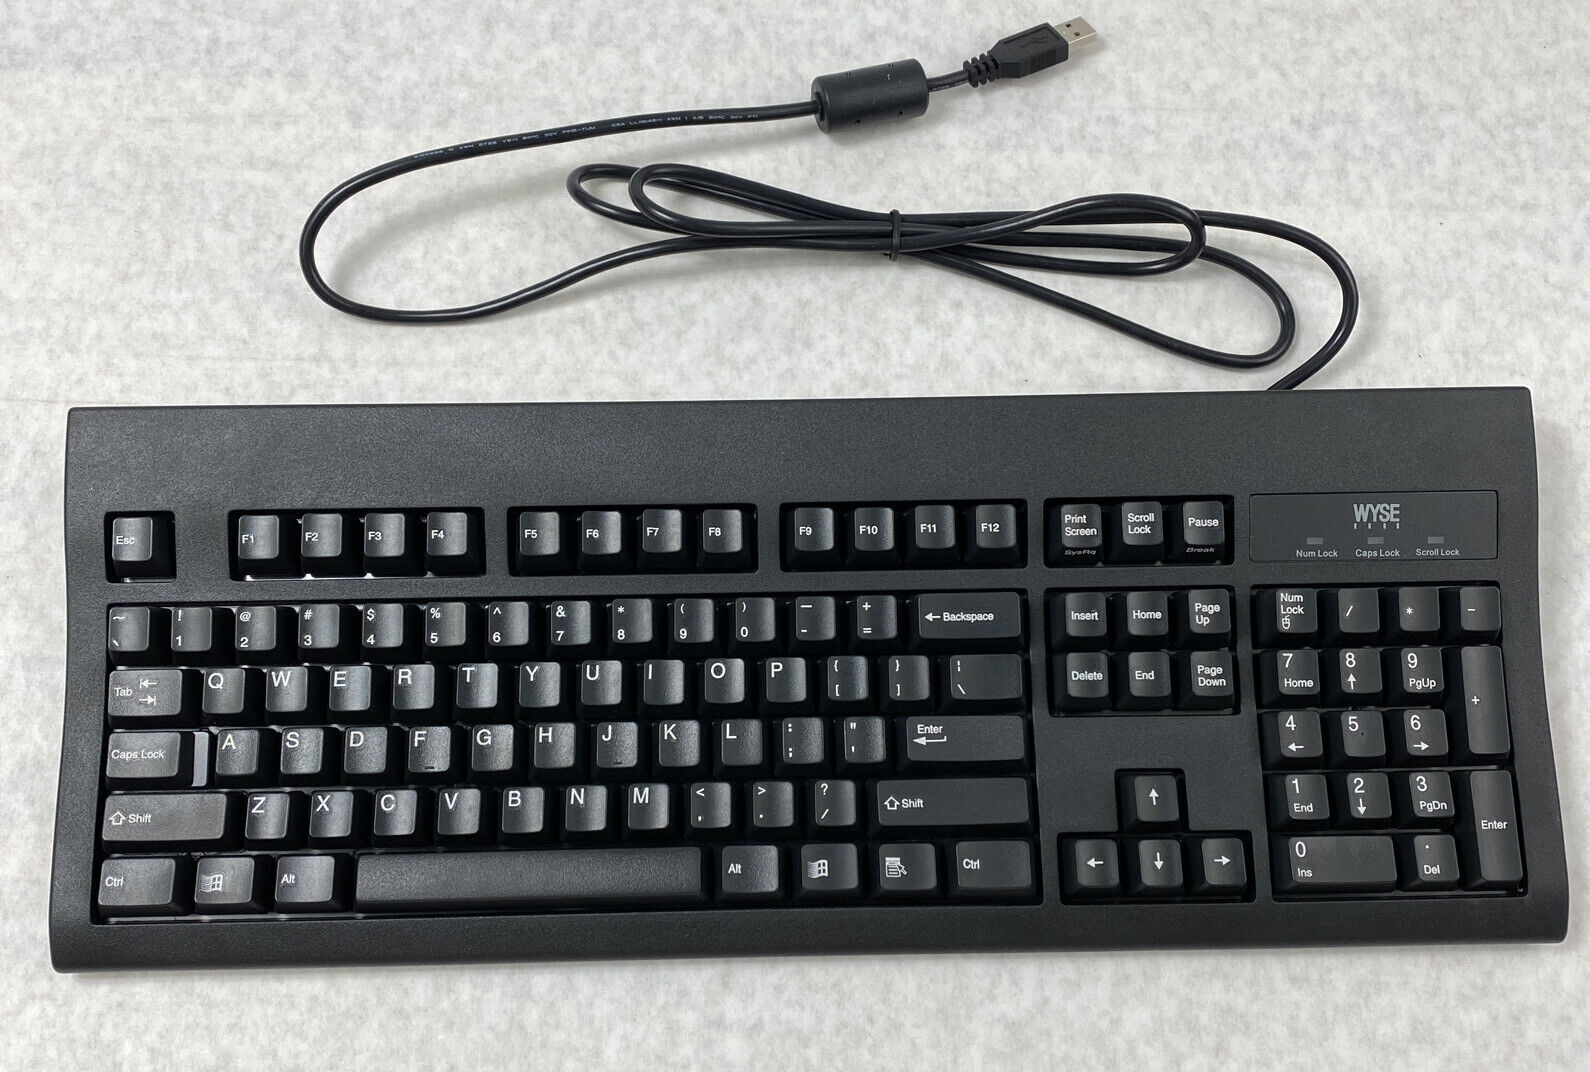 Wyse 901716-06L USB Keyboard KU-8933 With PS/2 Port Black OEM New In Box